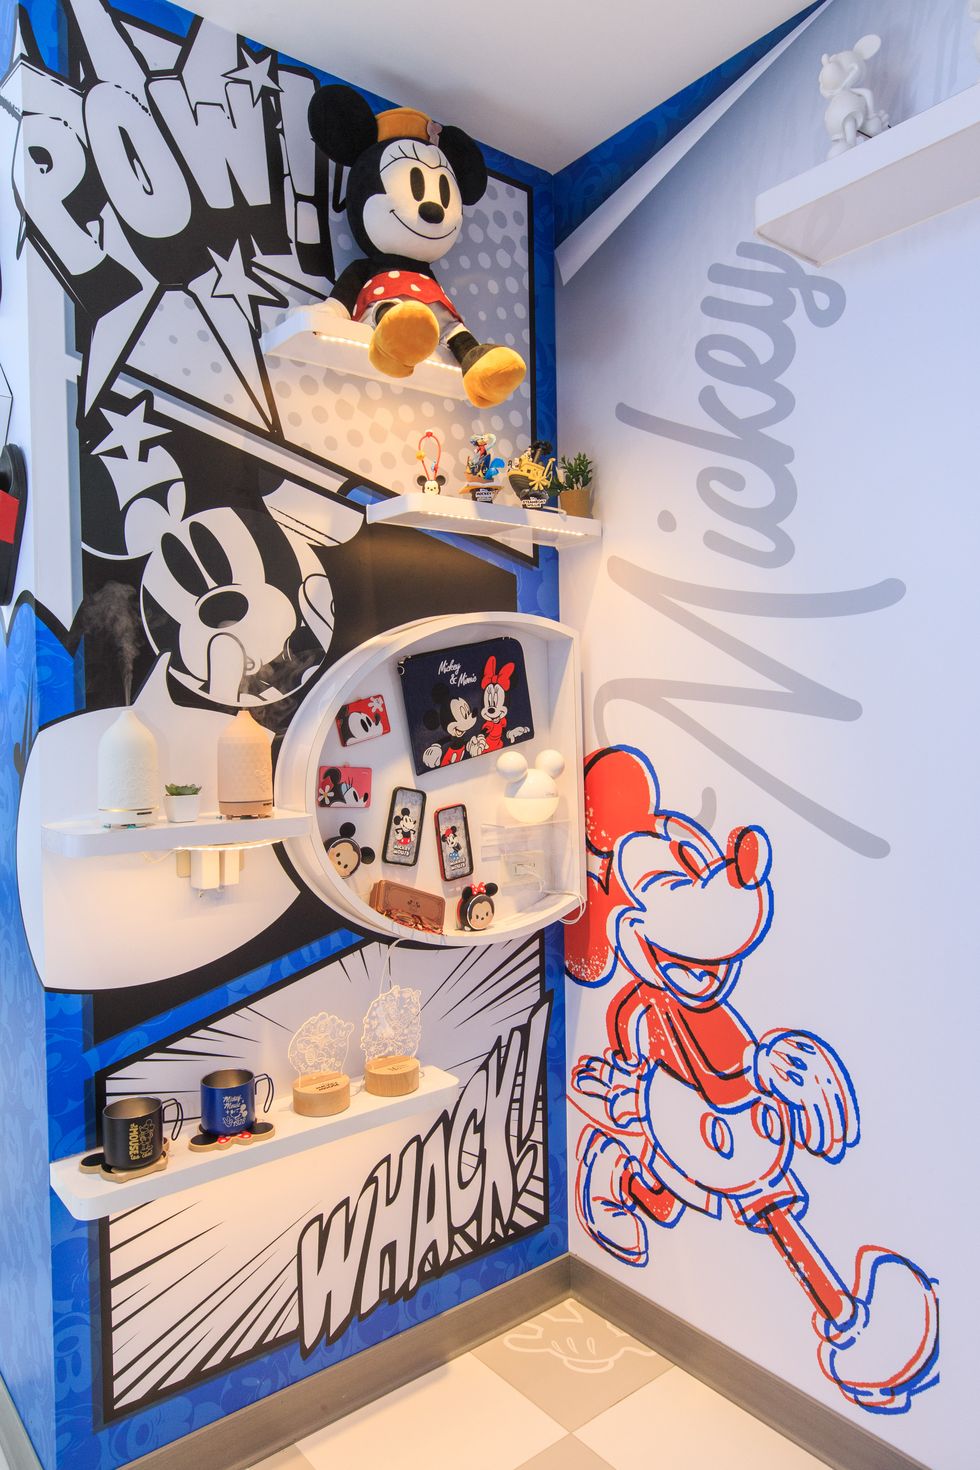 7-ELEVEN X 迪士尼聯名推出「米奇與好朋友主題店！」打造米奇咖啡杯、米奇涼被等台灣限定商品